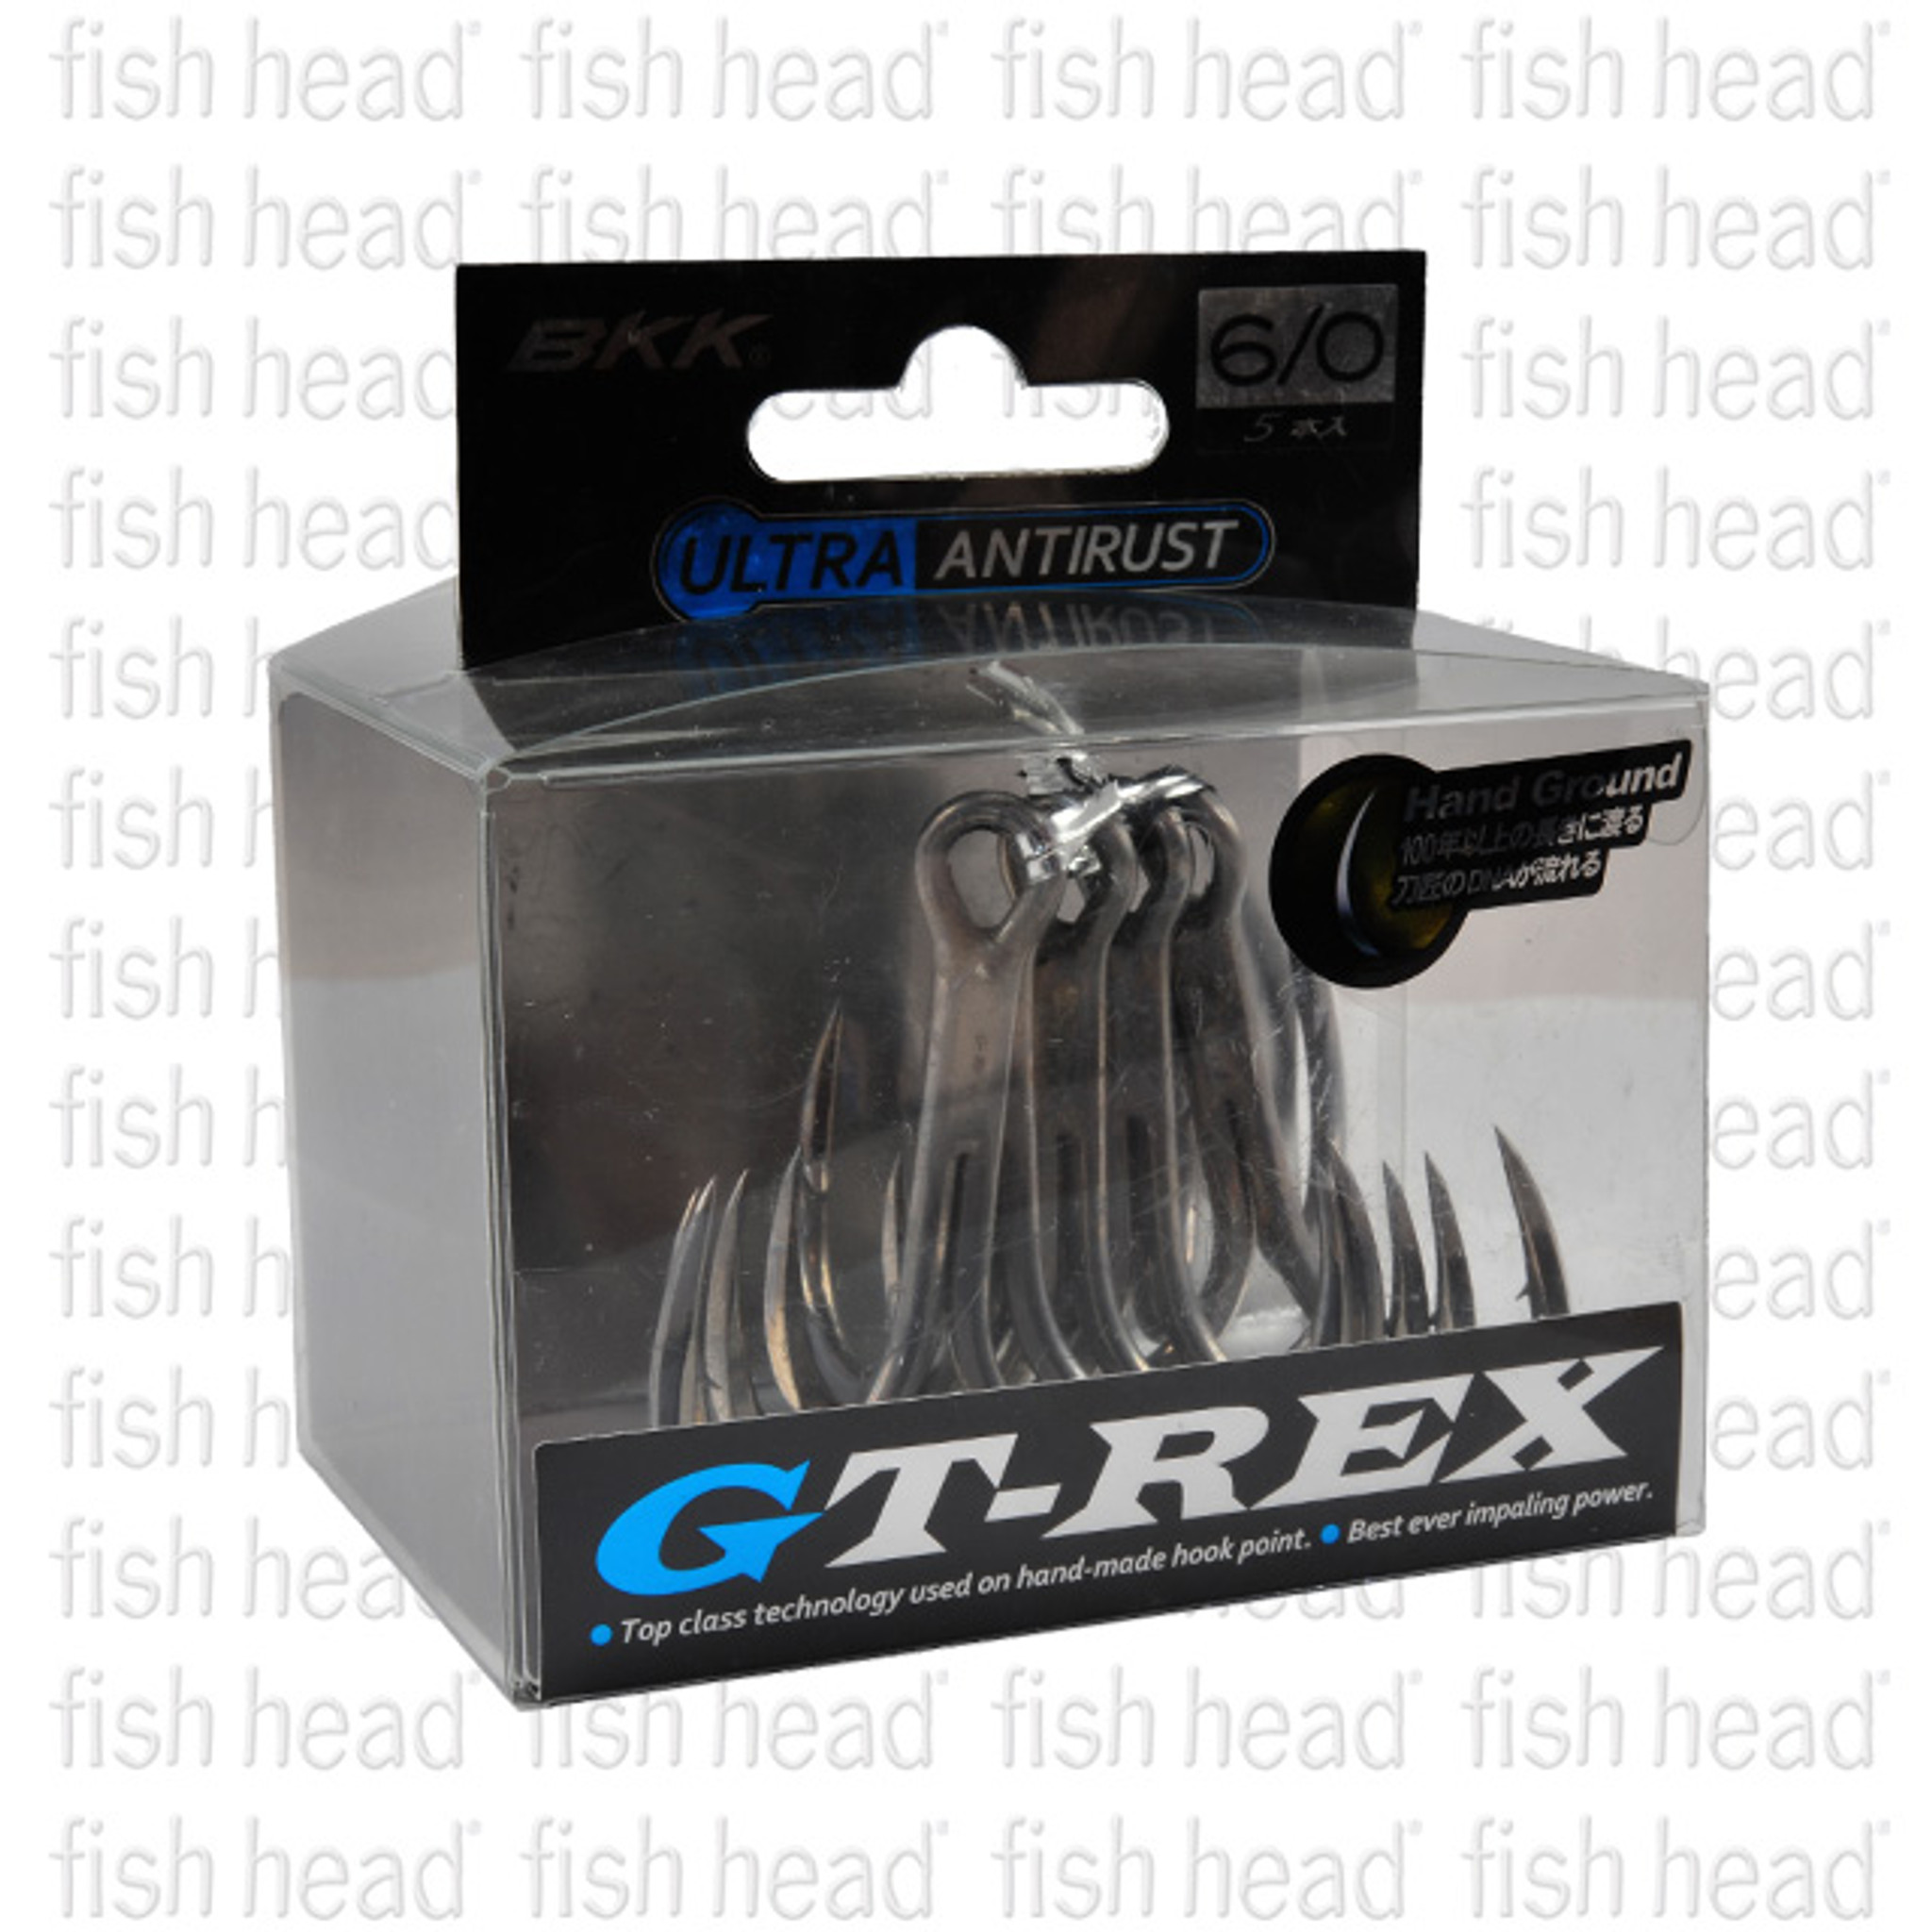 BKK GT-REX Barbed Treble Hook - Fish Head